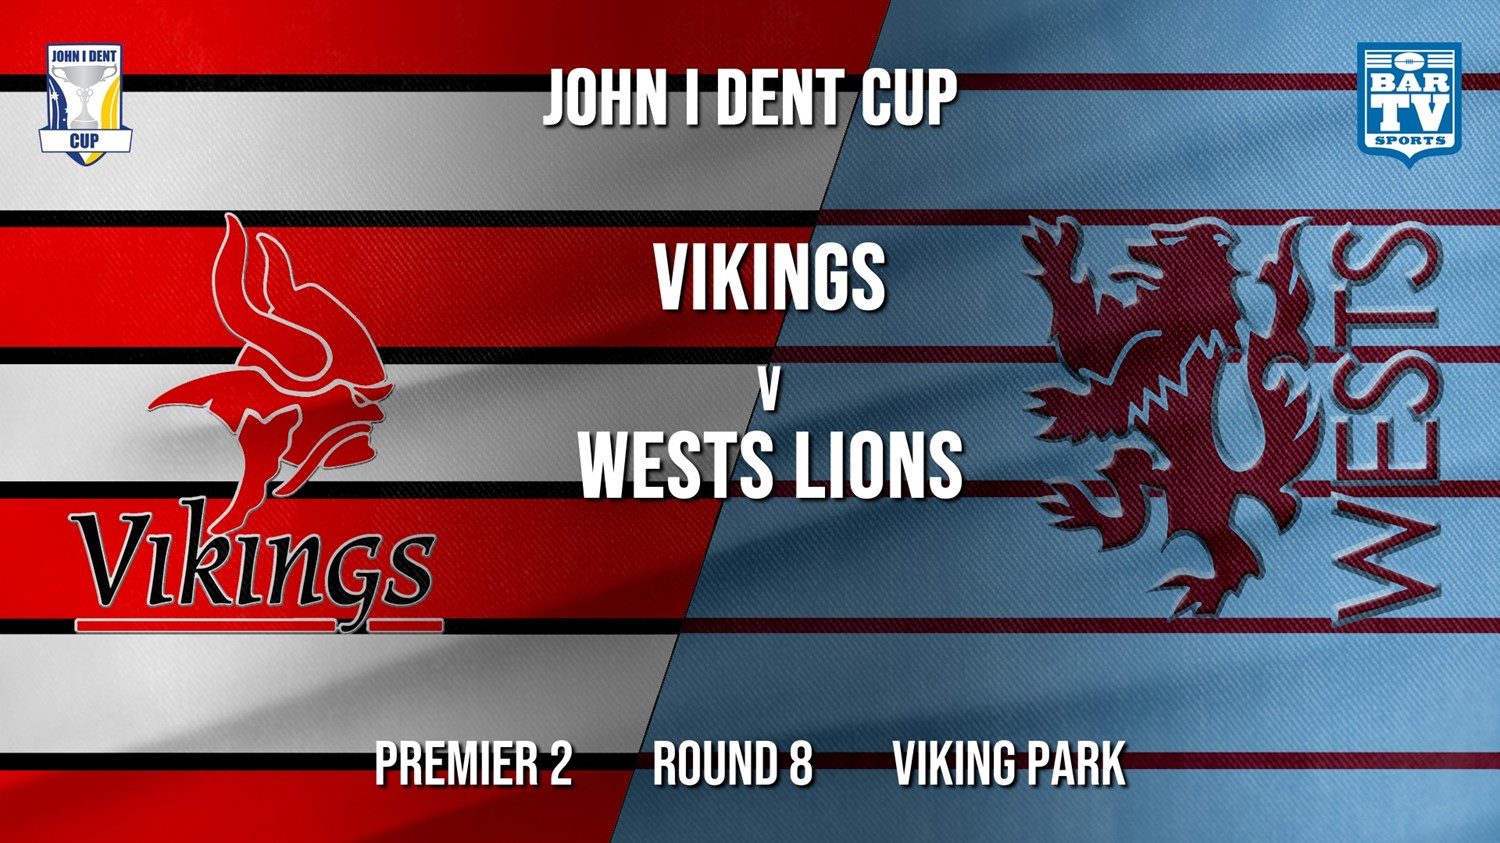 John I Dent Round 8 - Premier 2 - Tuggeranong Vikings v Wests Lions Minigame Slate Image